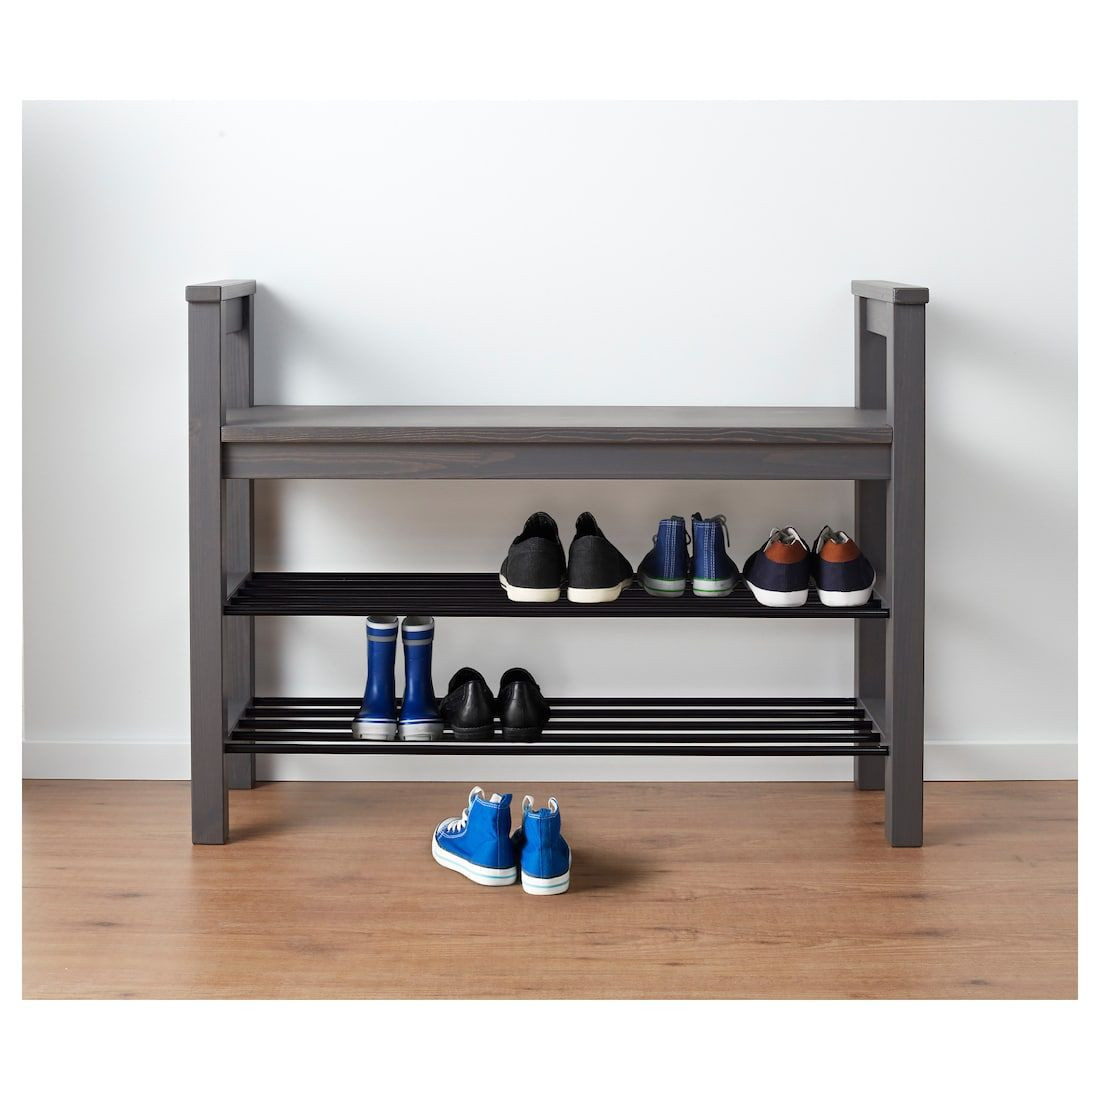 Hemnes Bench With Shoe Storage
 IKEA HEMNES Dark Gray Gray Stained Bench with shoe storage